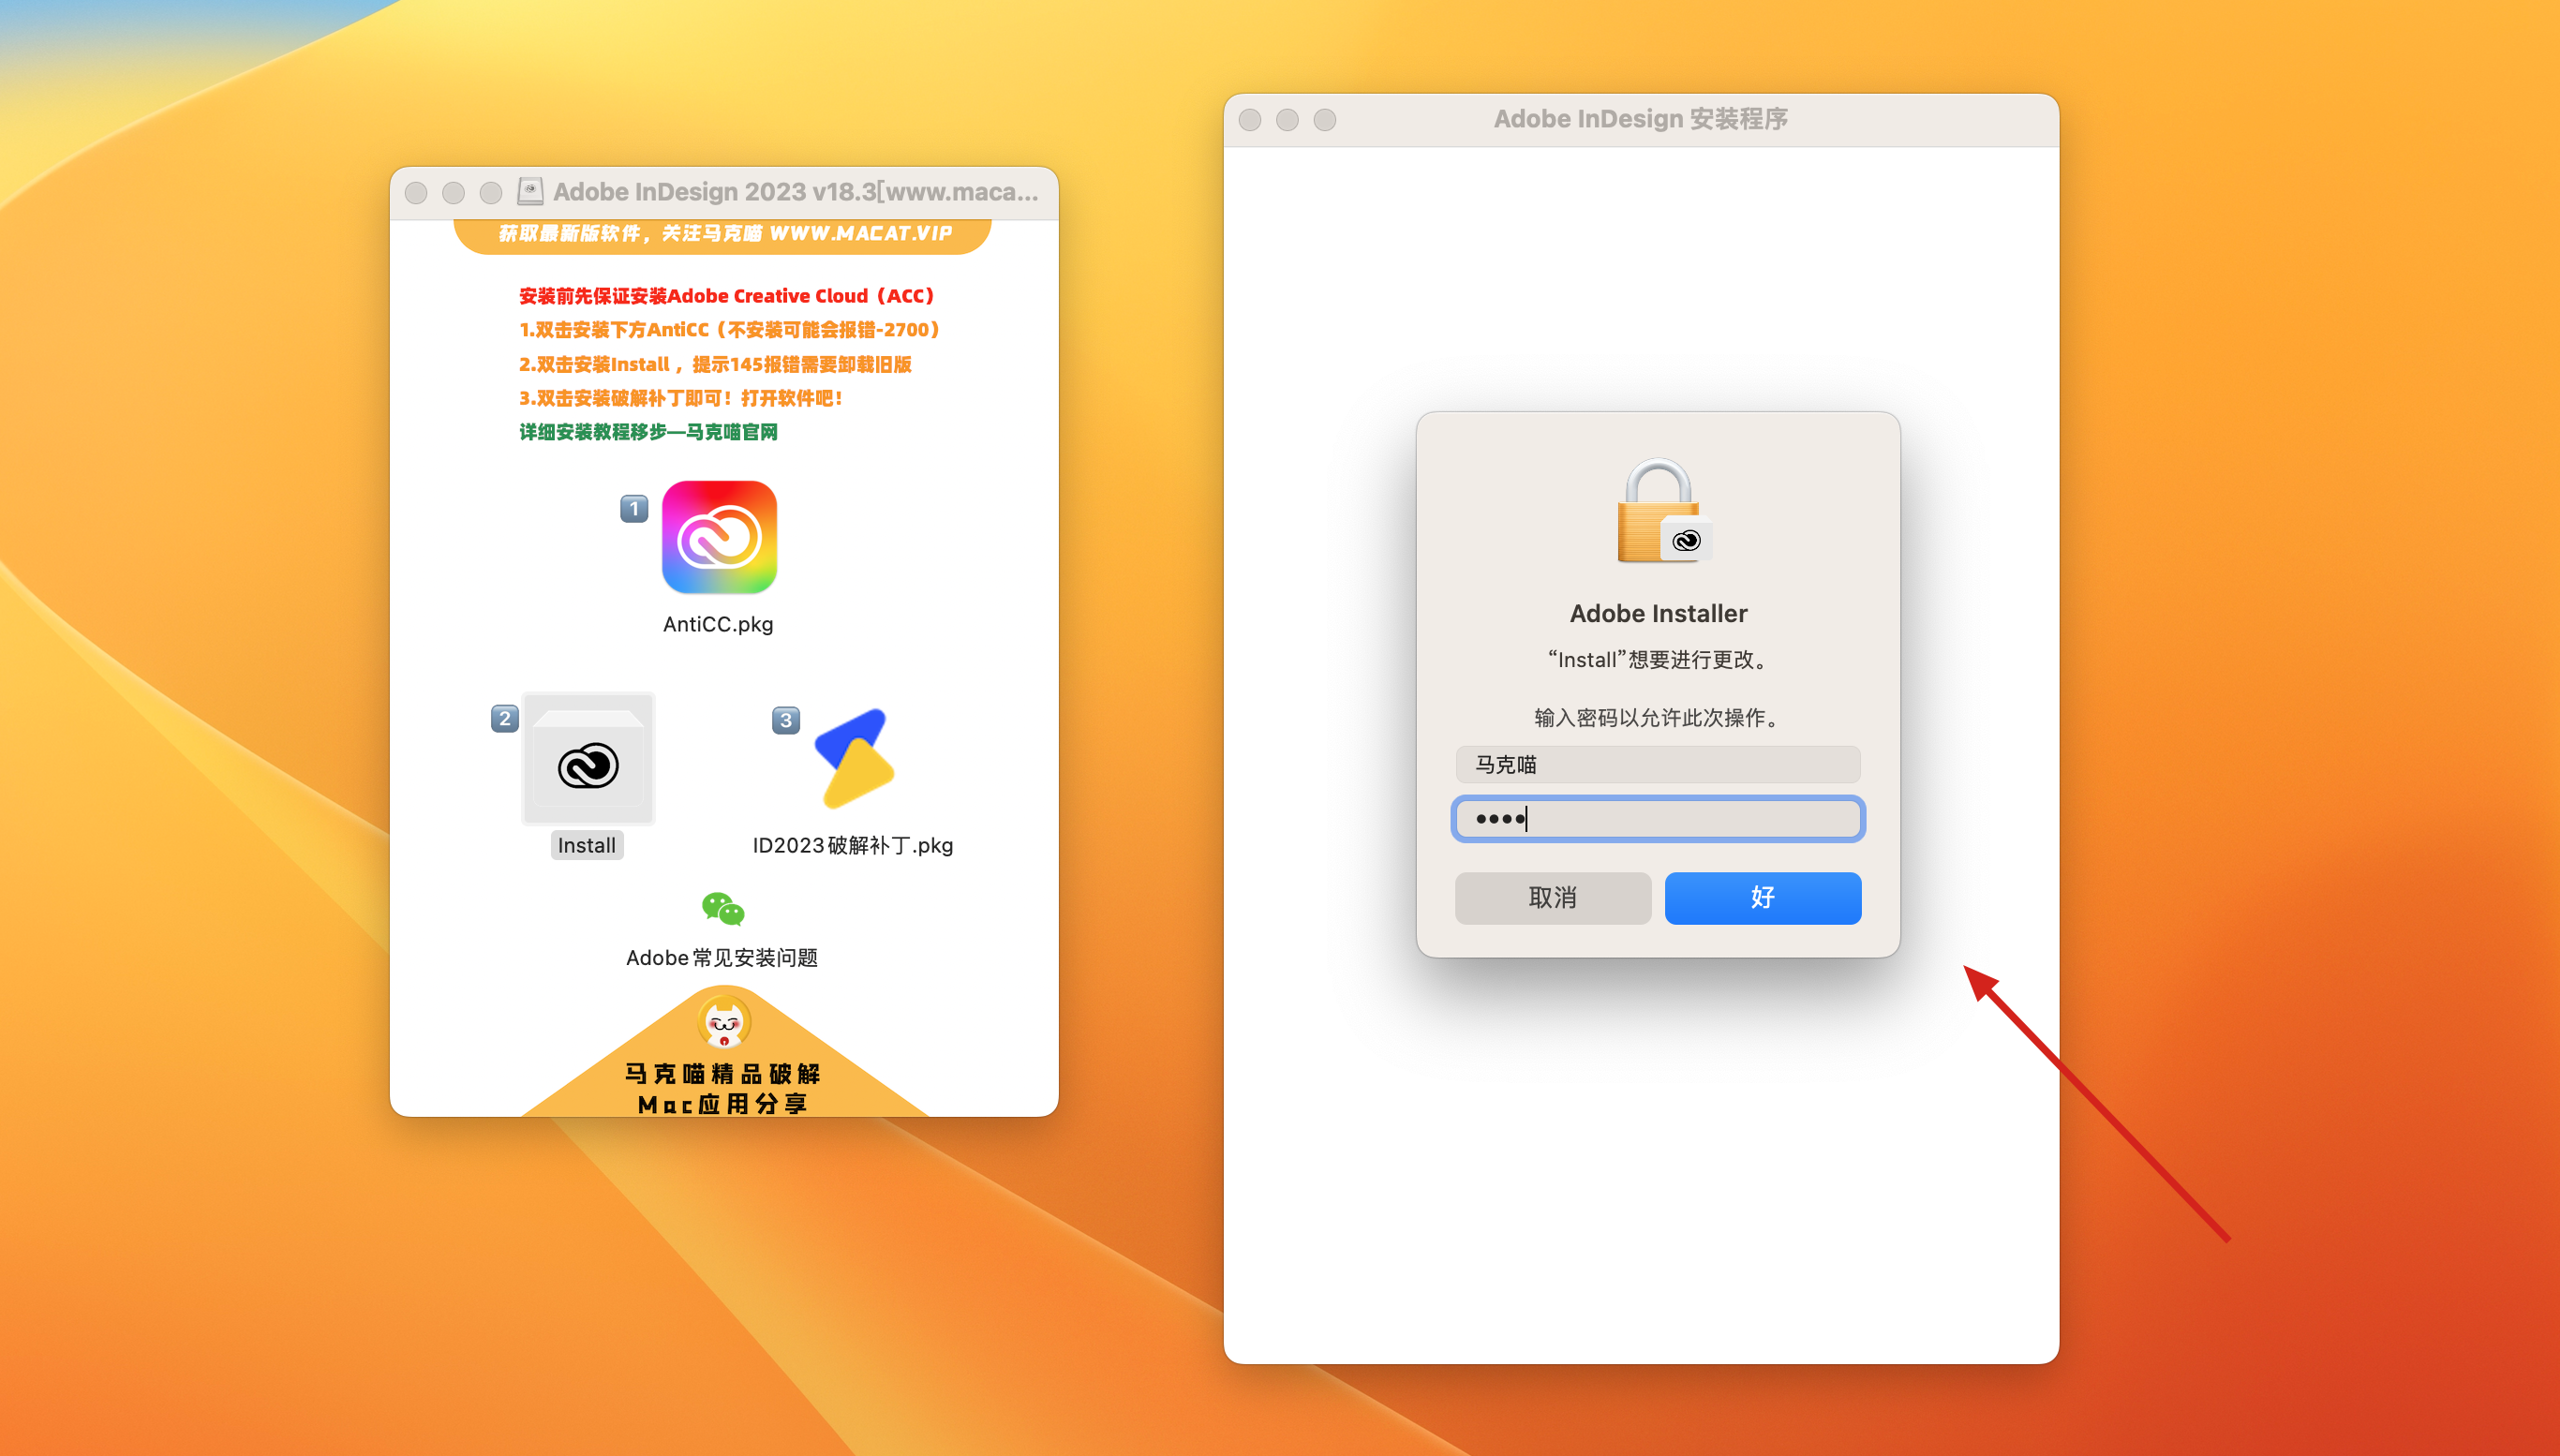 InDesign 2023 for Mac v18.3 中文激活版 intel/M1通用 (id 2023)